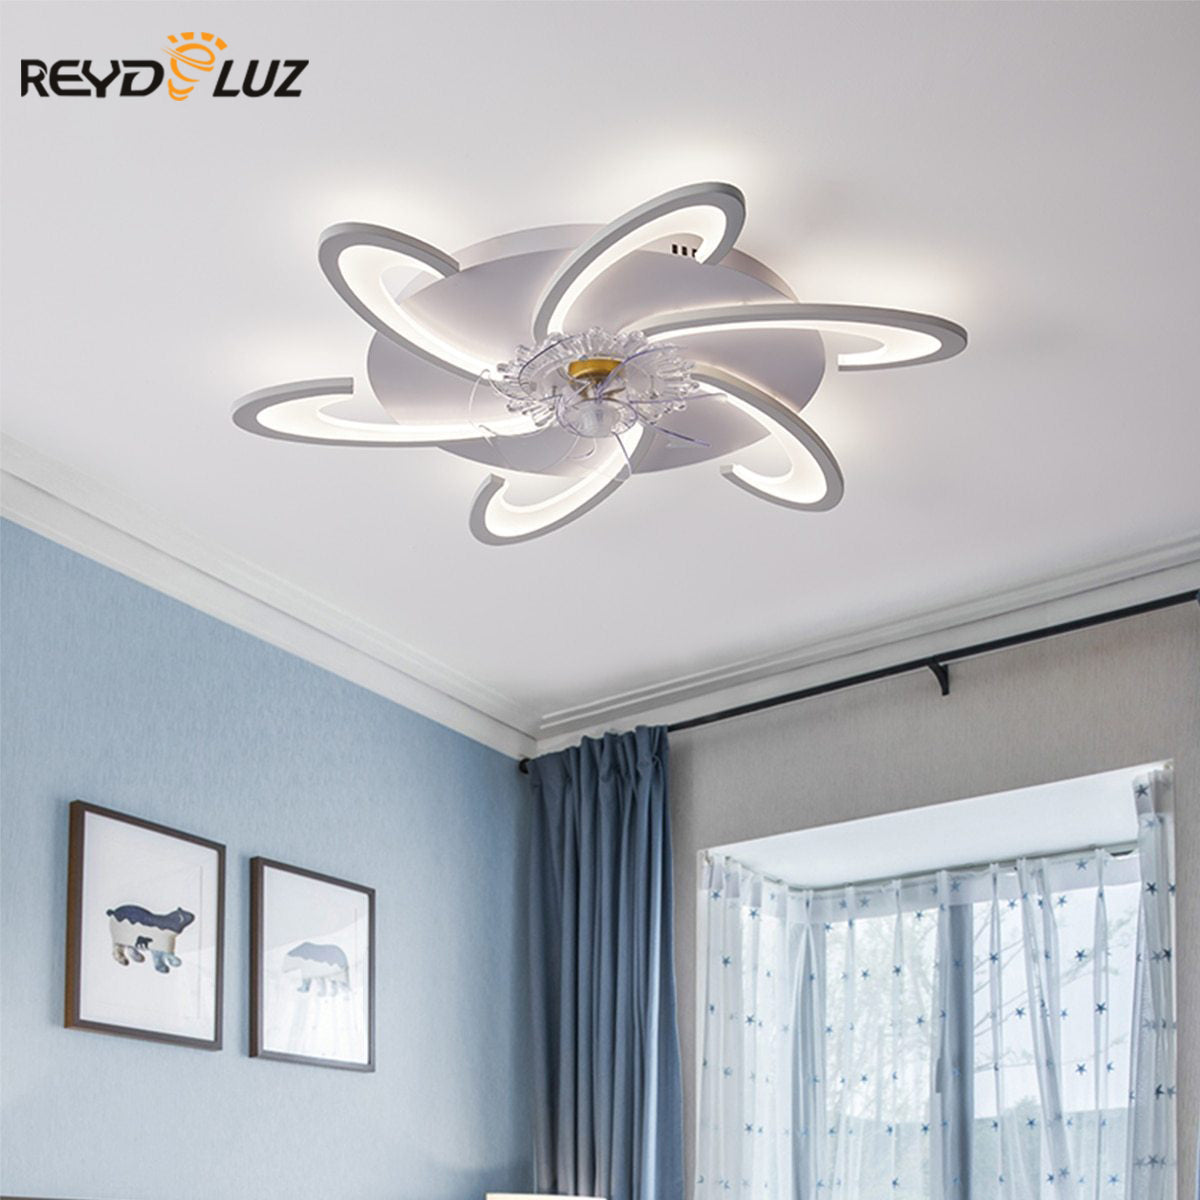 Nordic Ceiling Lights 30.7 inch with Fan  Remote Control for Bedroom Decor Ventilador Living Room LED Ceiling Fan Lighting REYDELUZ